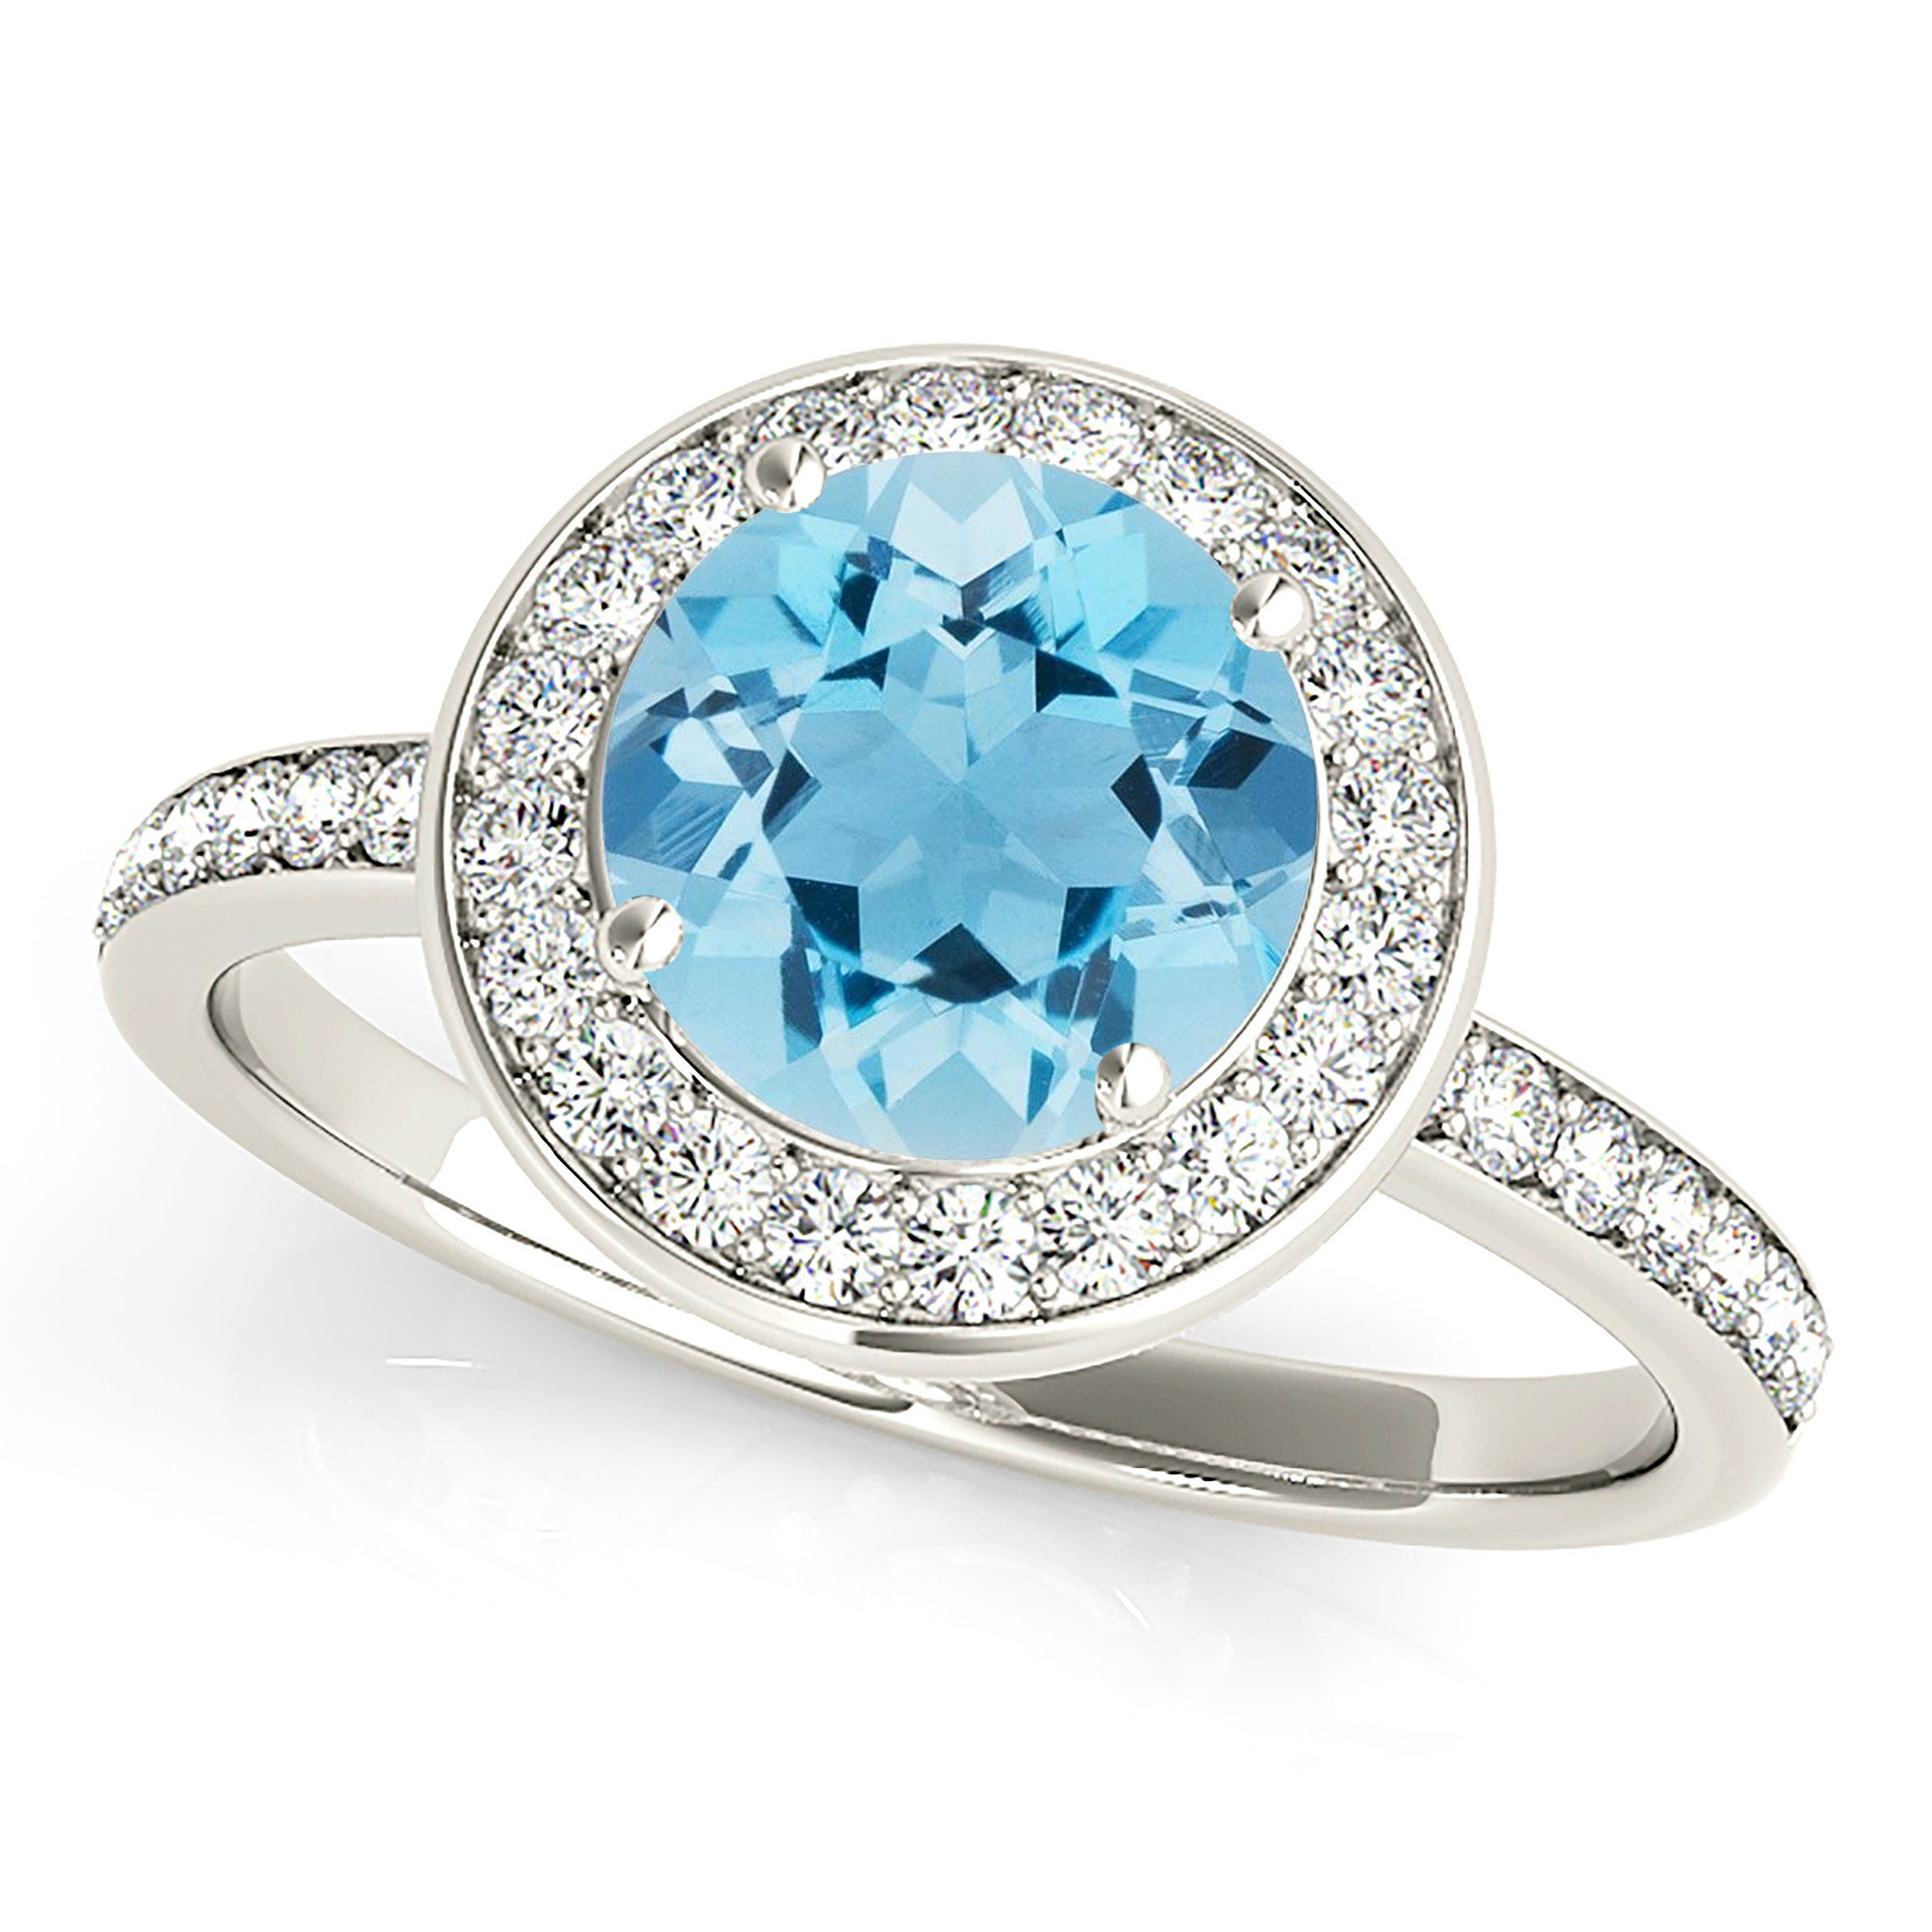 1.63 ct. Genuine Aquamarine Ring With 0.35 ctw. Diamond Halo, Delicate Diamond Band, Invisible Gallery | Round Blue Aquamarine Halo Ring-in 14K/18K White, Yellow, Rose Gold and Platinum - Christmas Jewelry Gift -VIRABYANI